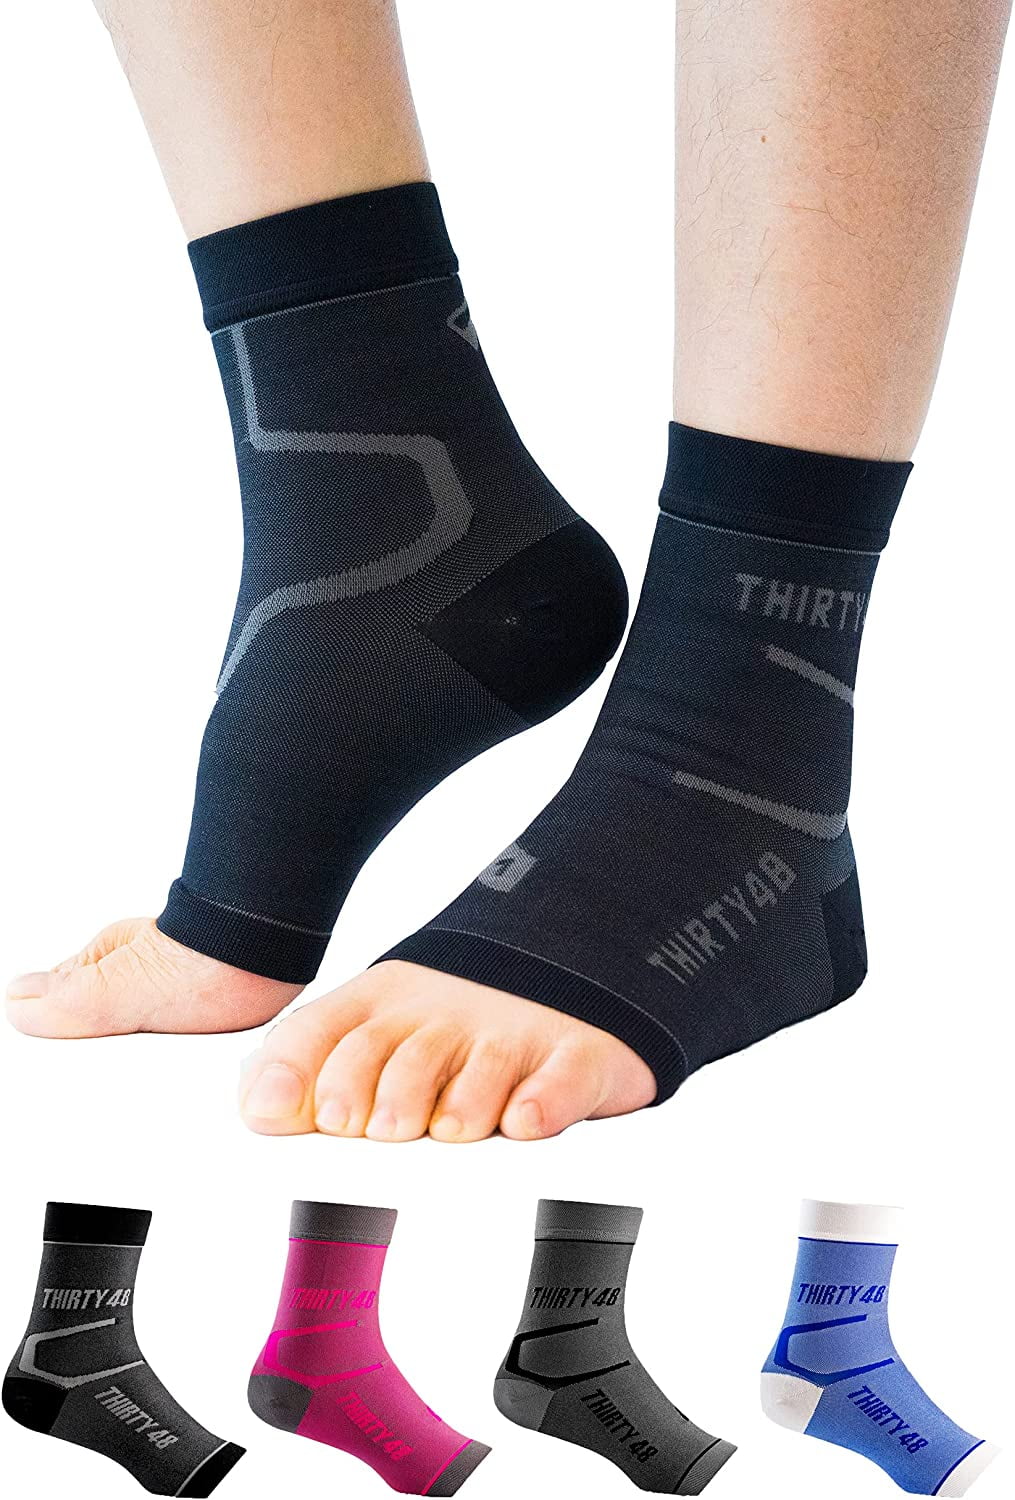 Thirty48 Plantar Fasciitis Compression Socks(1 or 2 Pairs), mmHg Foot ...